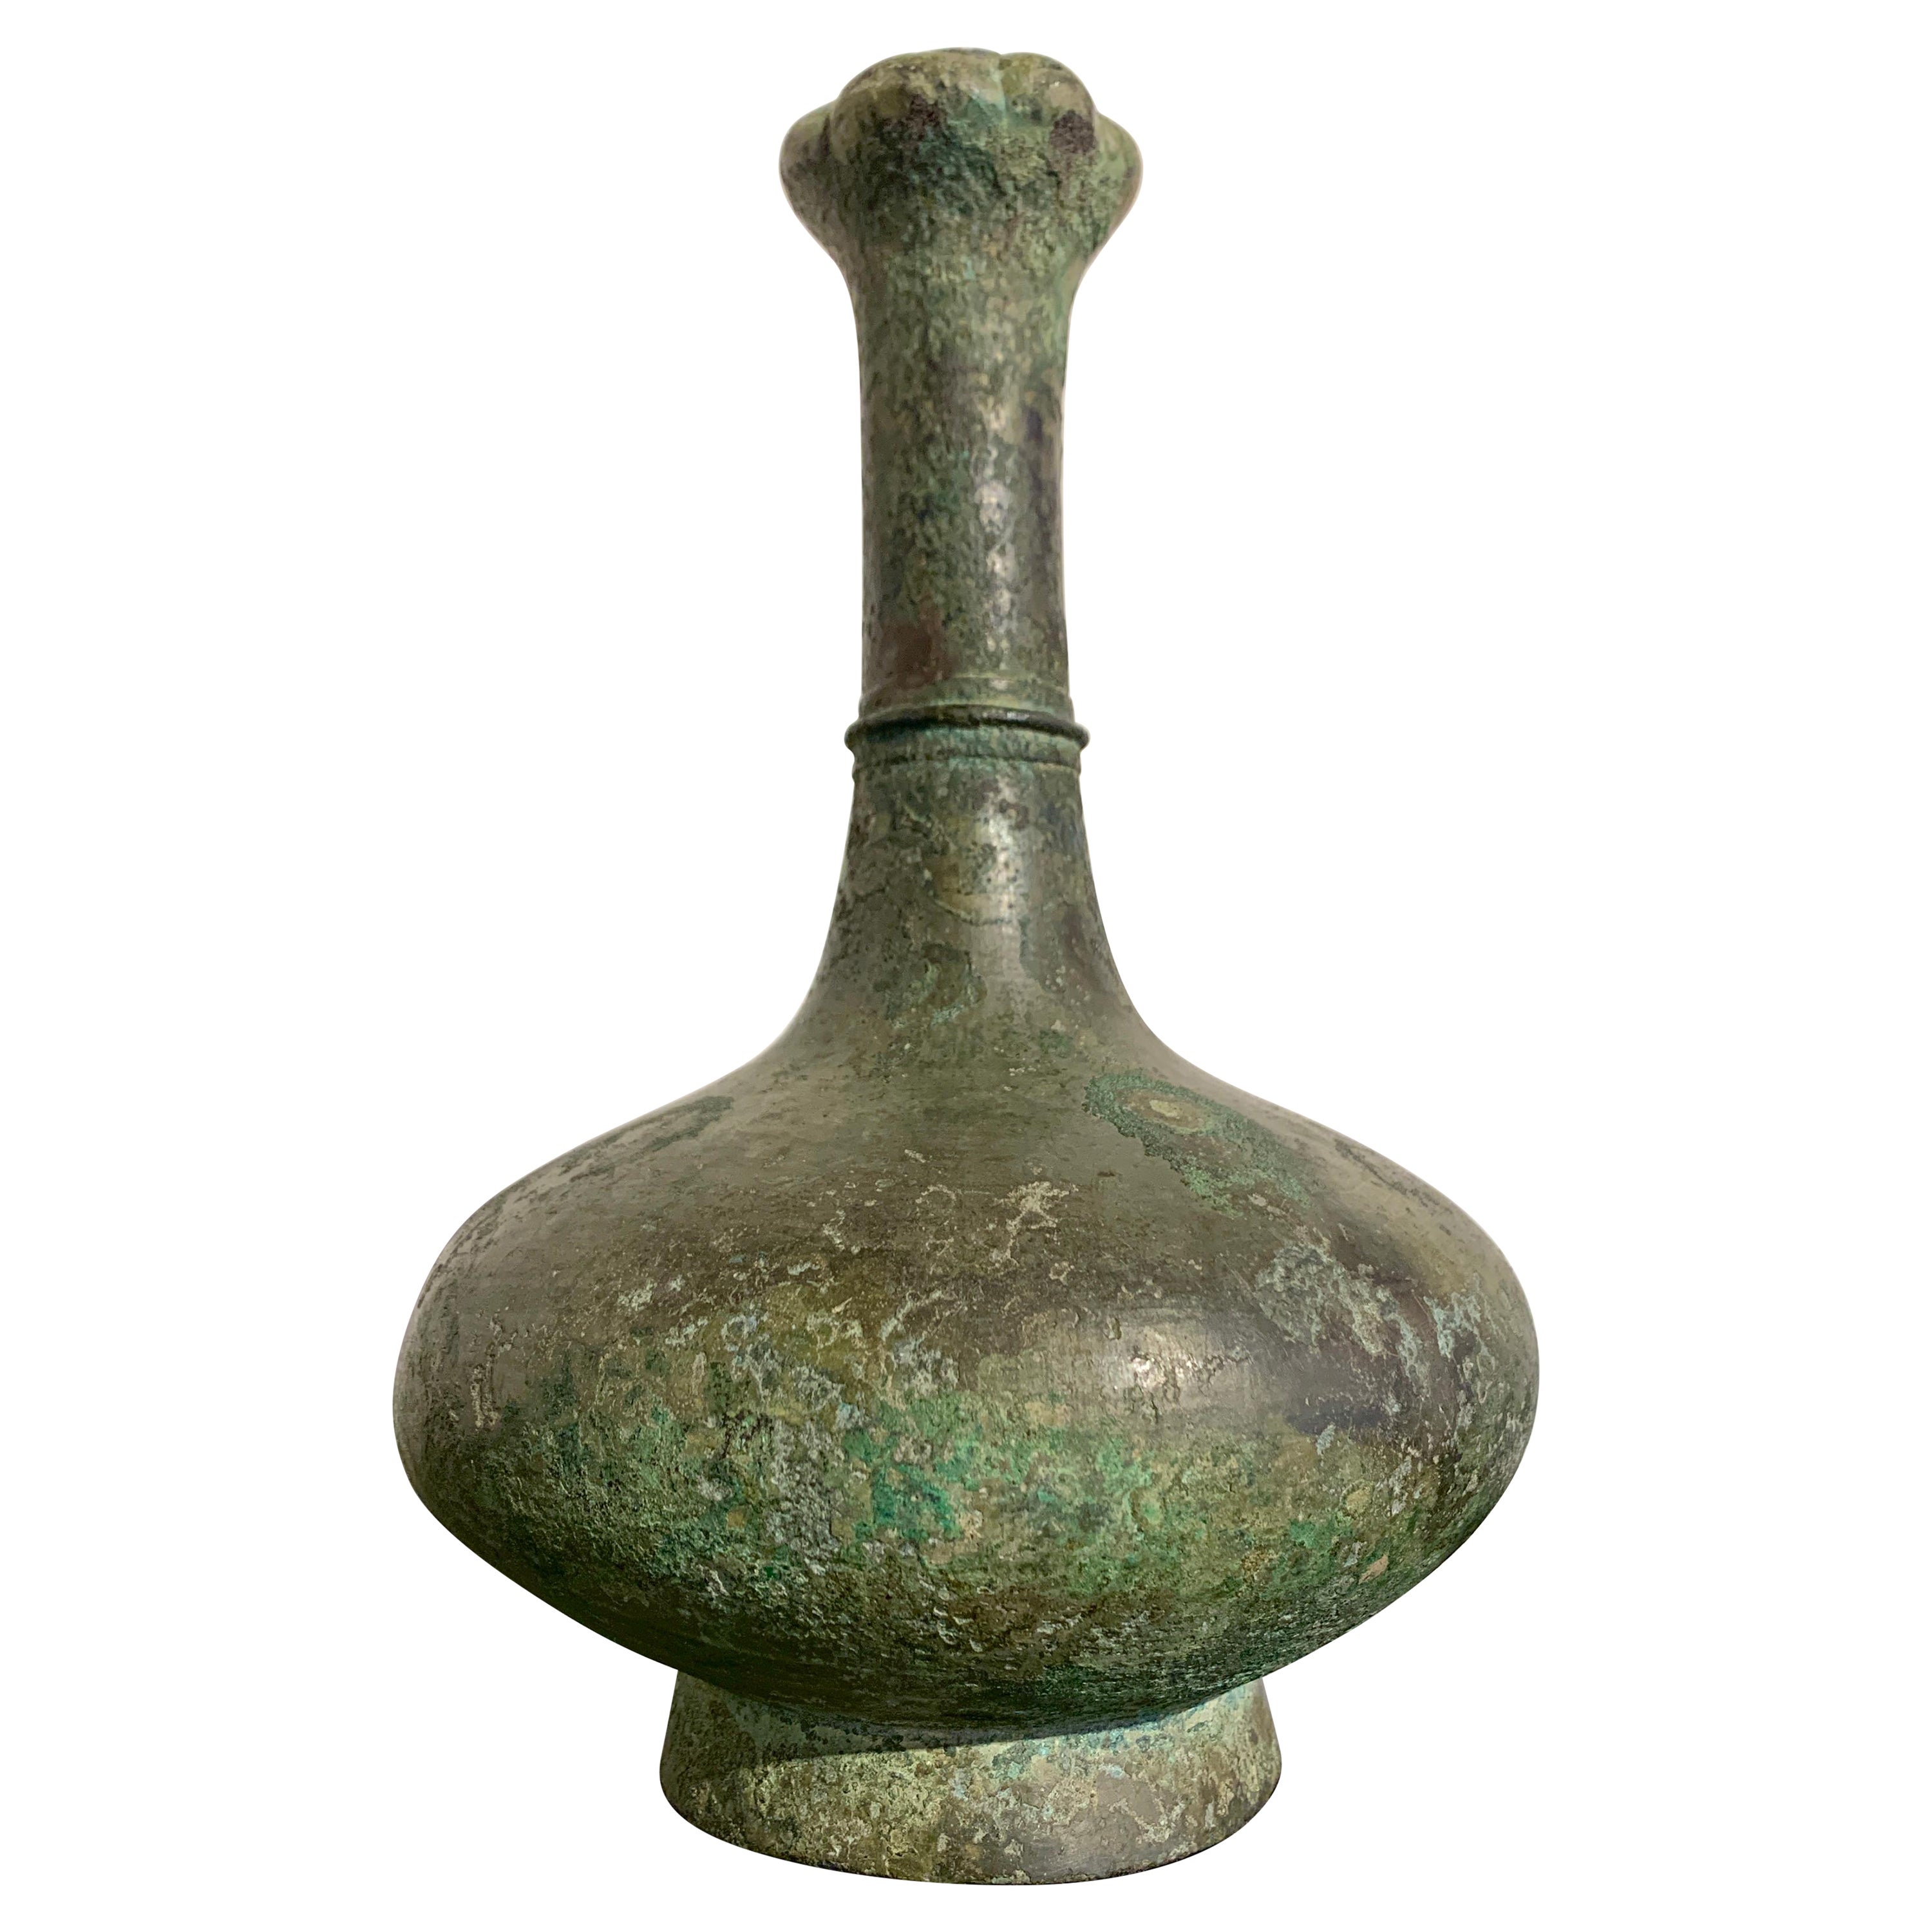 Vase à tête de grenouille en bronze de la dynastie chinoise occidentale Han, 206 av. J.-C. - 25 apr. J.-C.